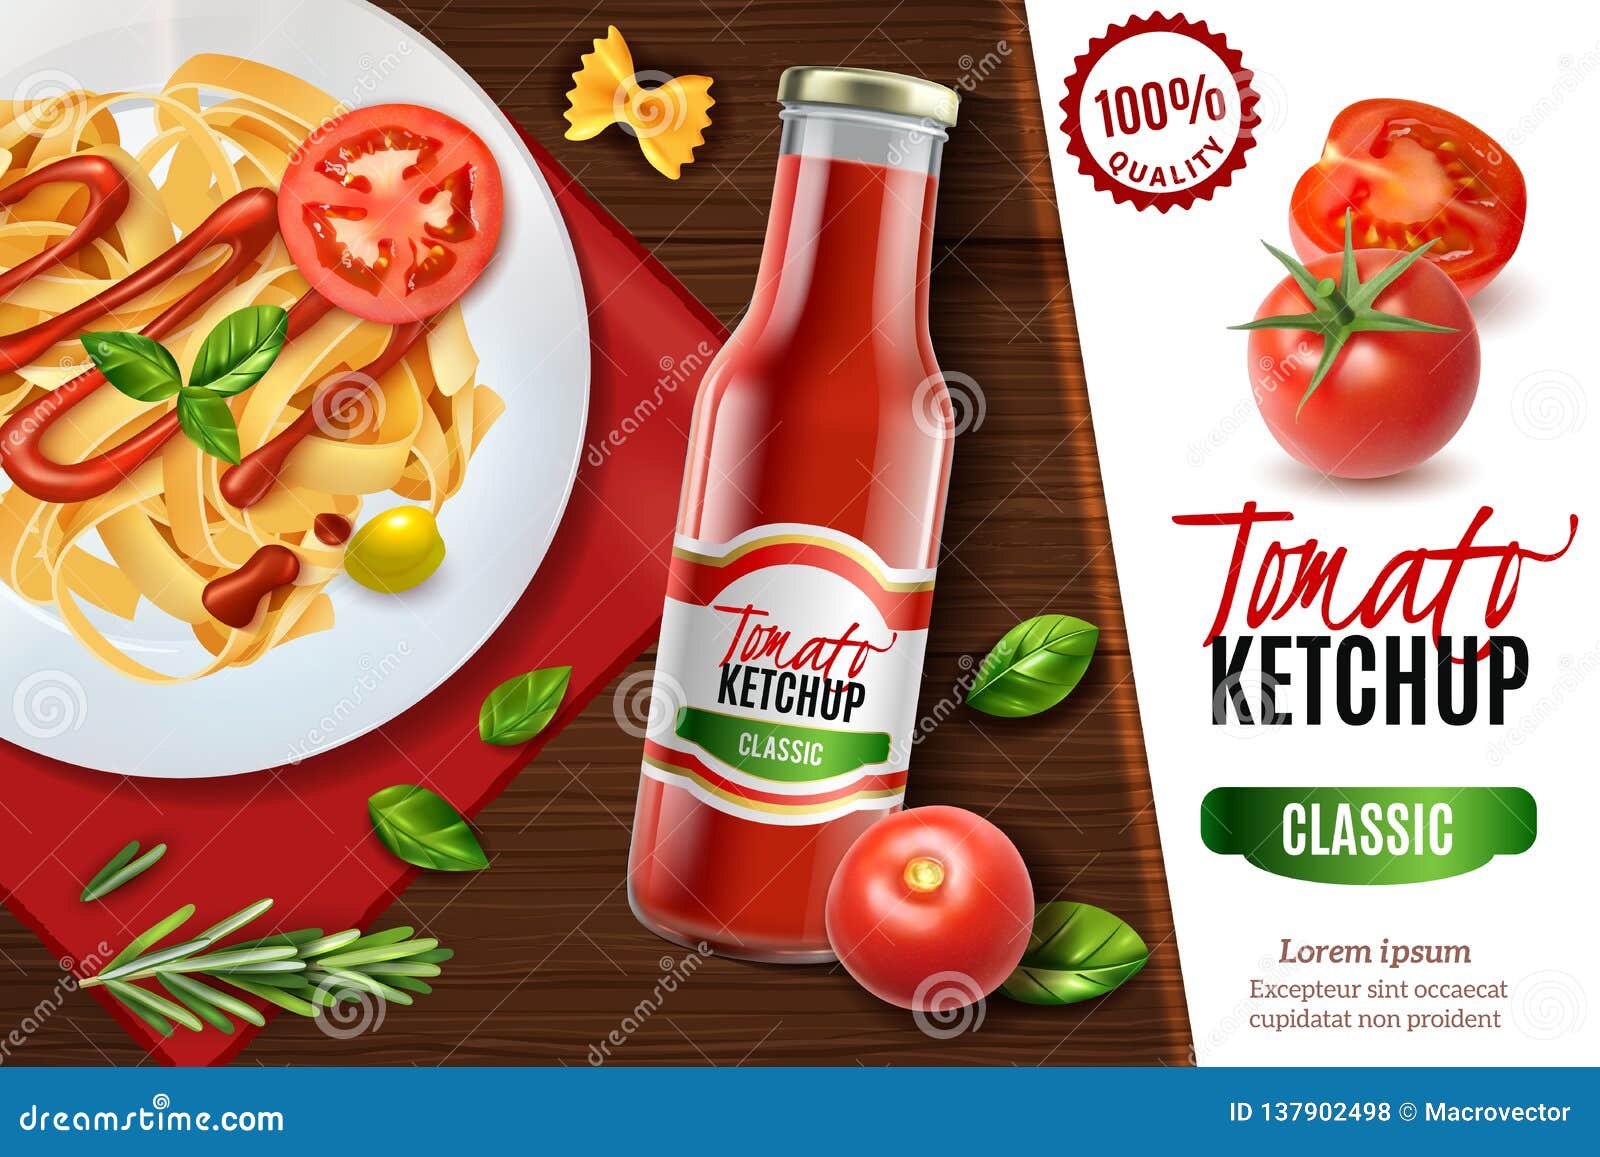 Кетчуп на английском. Реклама кетчупа. Рекламные плакаты на кетчуп. Реклама кетчупа плакат. Кетчуп томатный реклама.